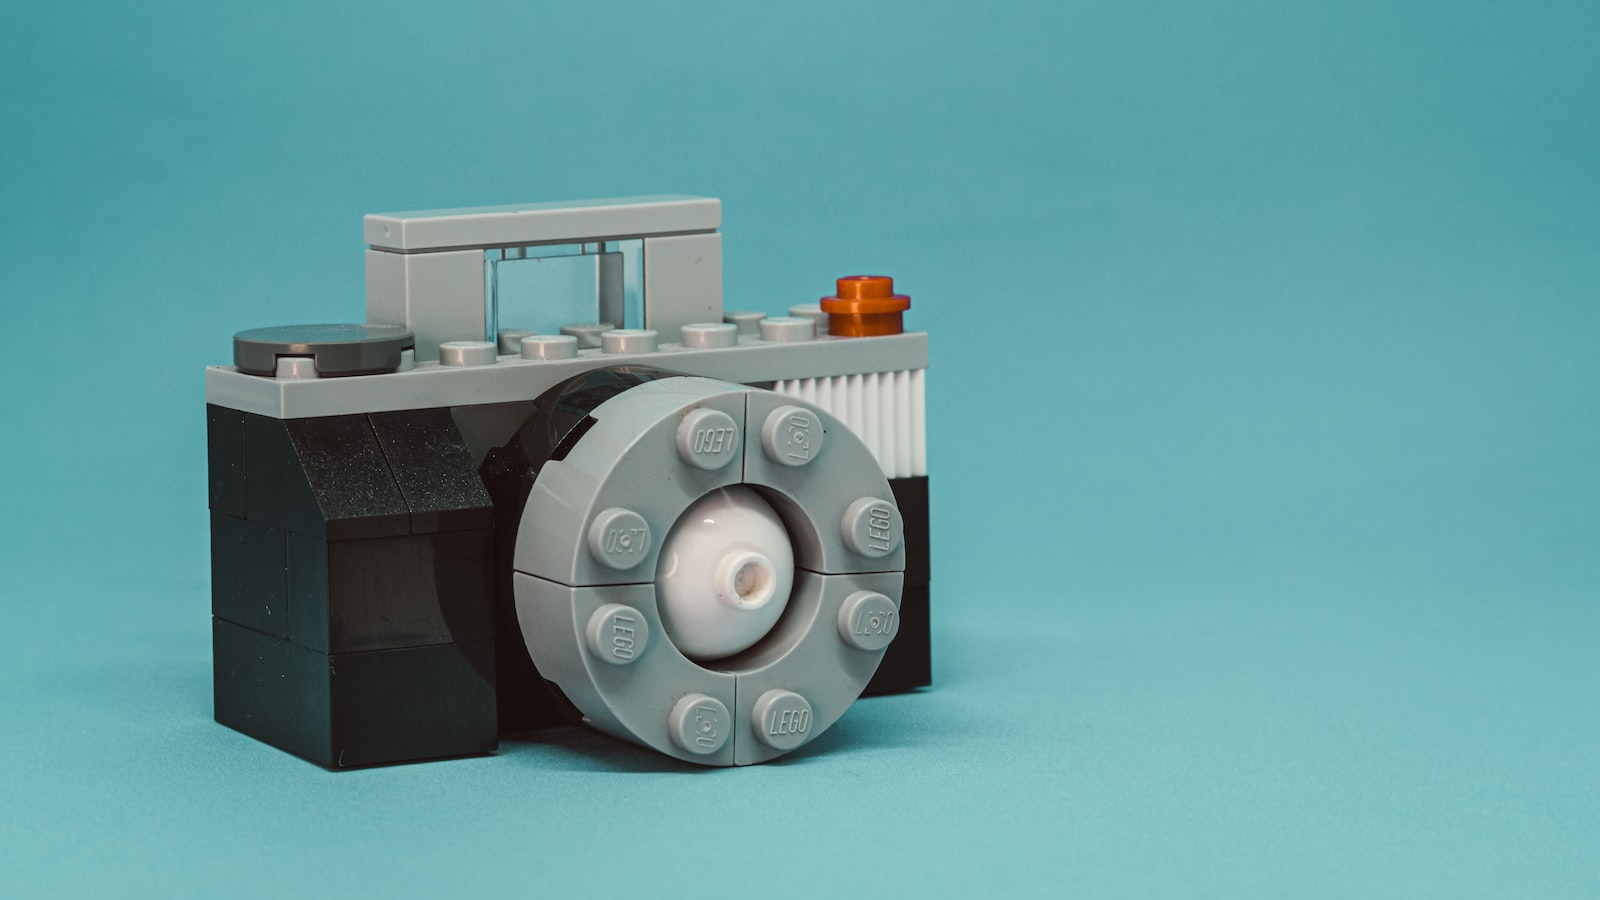 1. Tìm Hiểu Về Lego Bearbrick Mini